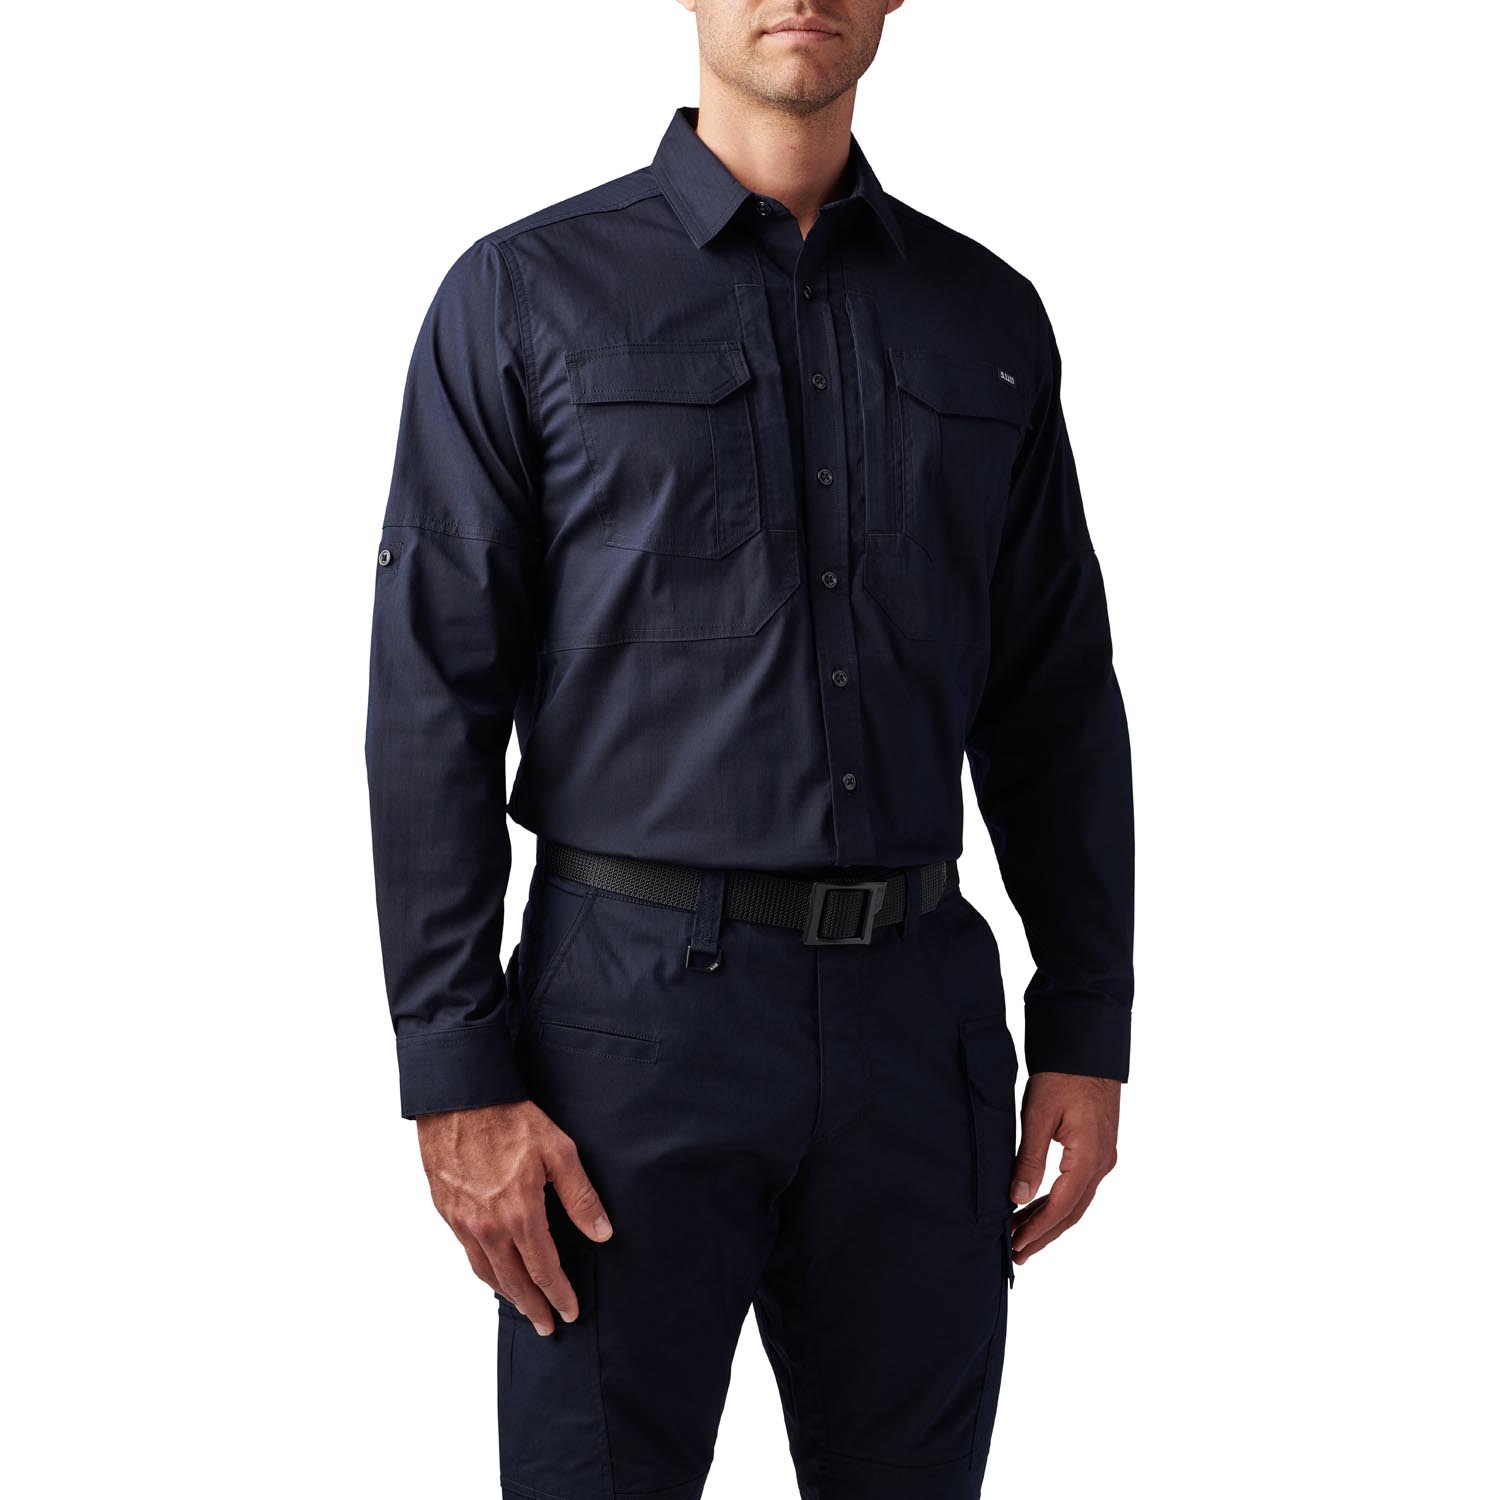 5.11 Tactical Men's ABR Pro Long Sleeve Shirt